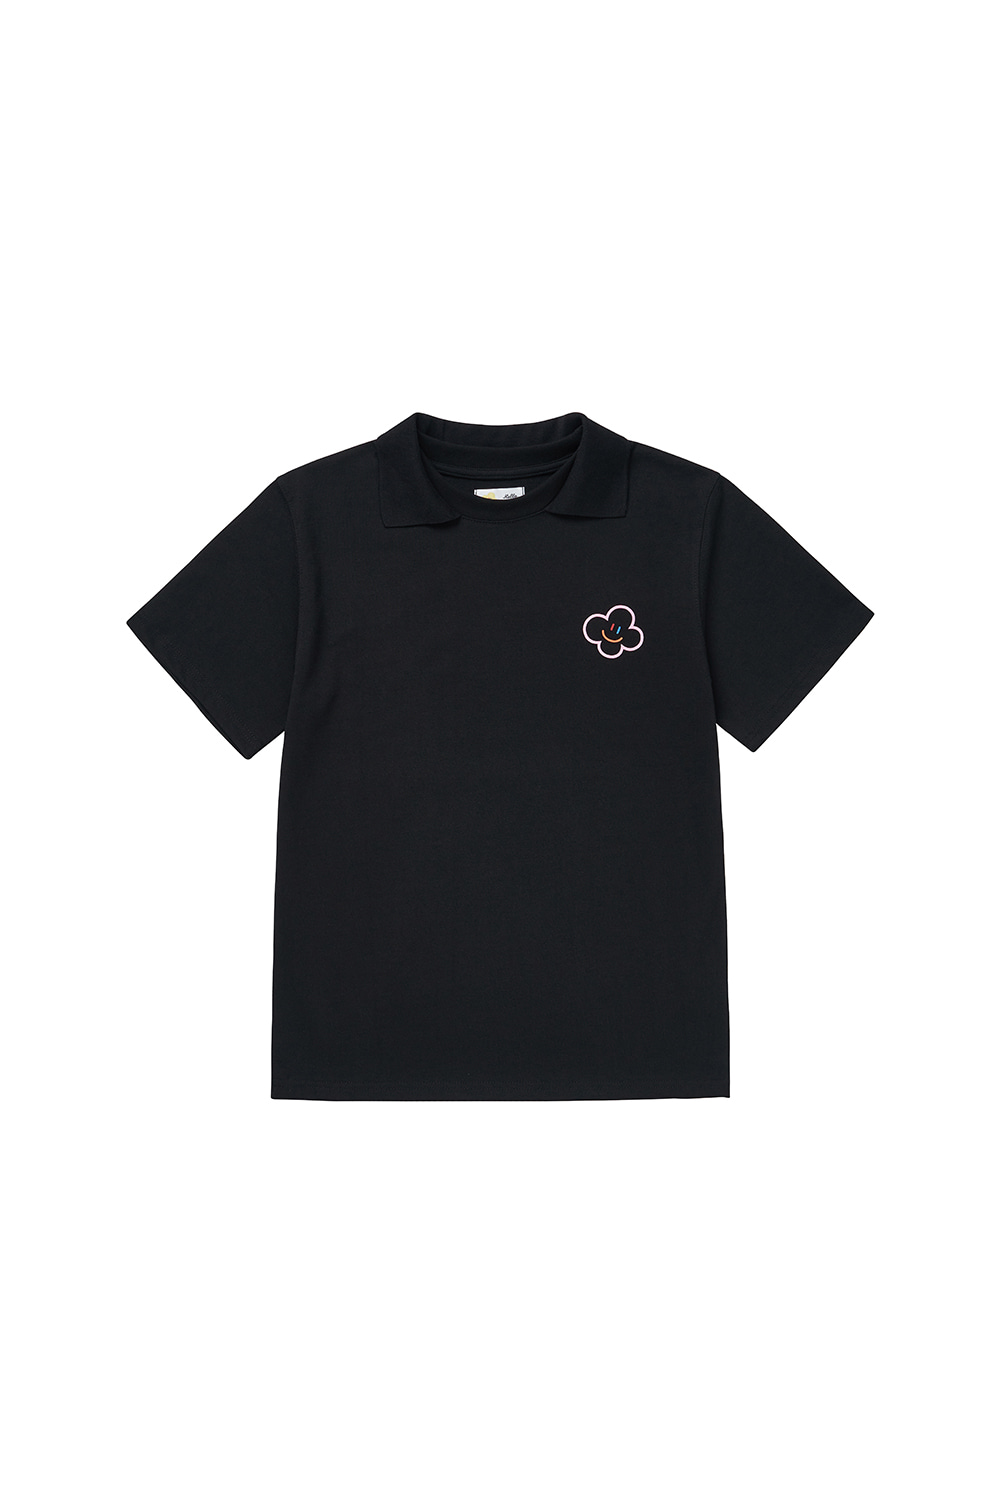 Hello LaLa New PK T-Shirts [Black]